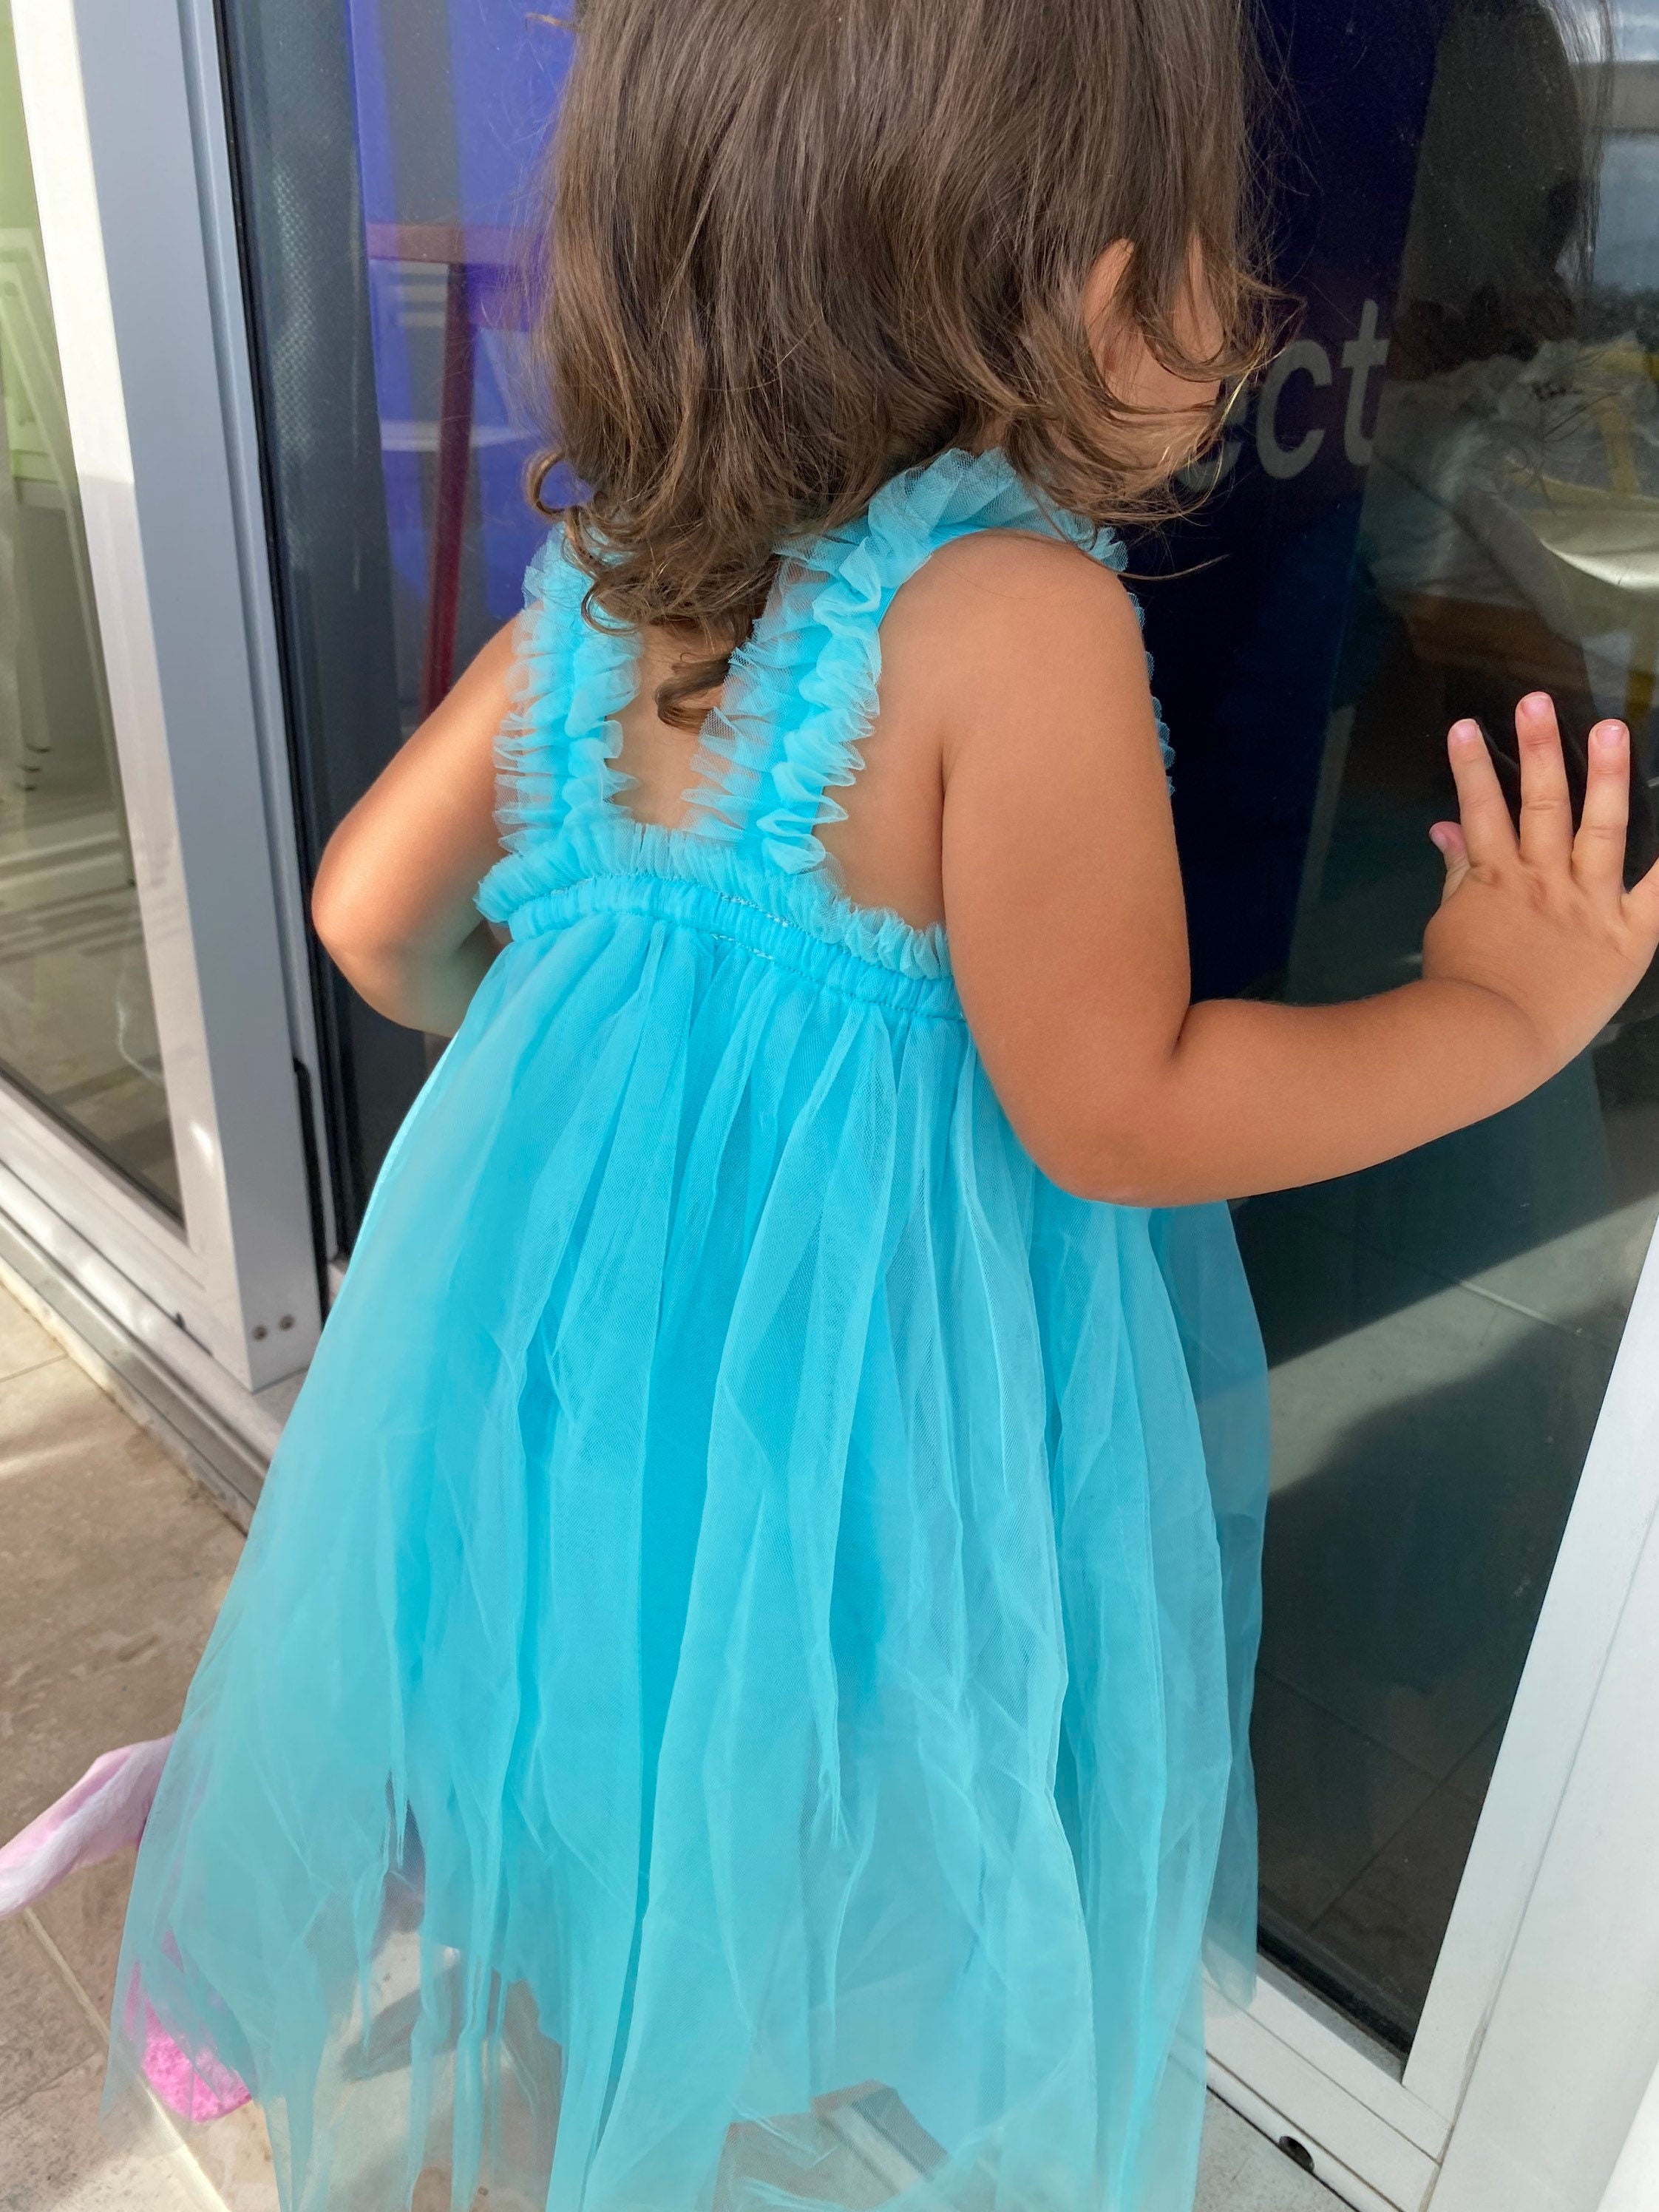 Plain Turquoise Baby Tulle Dress